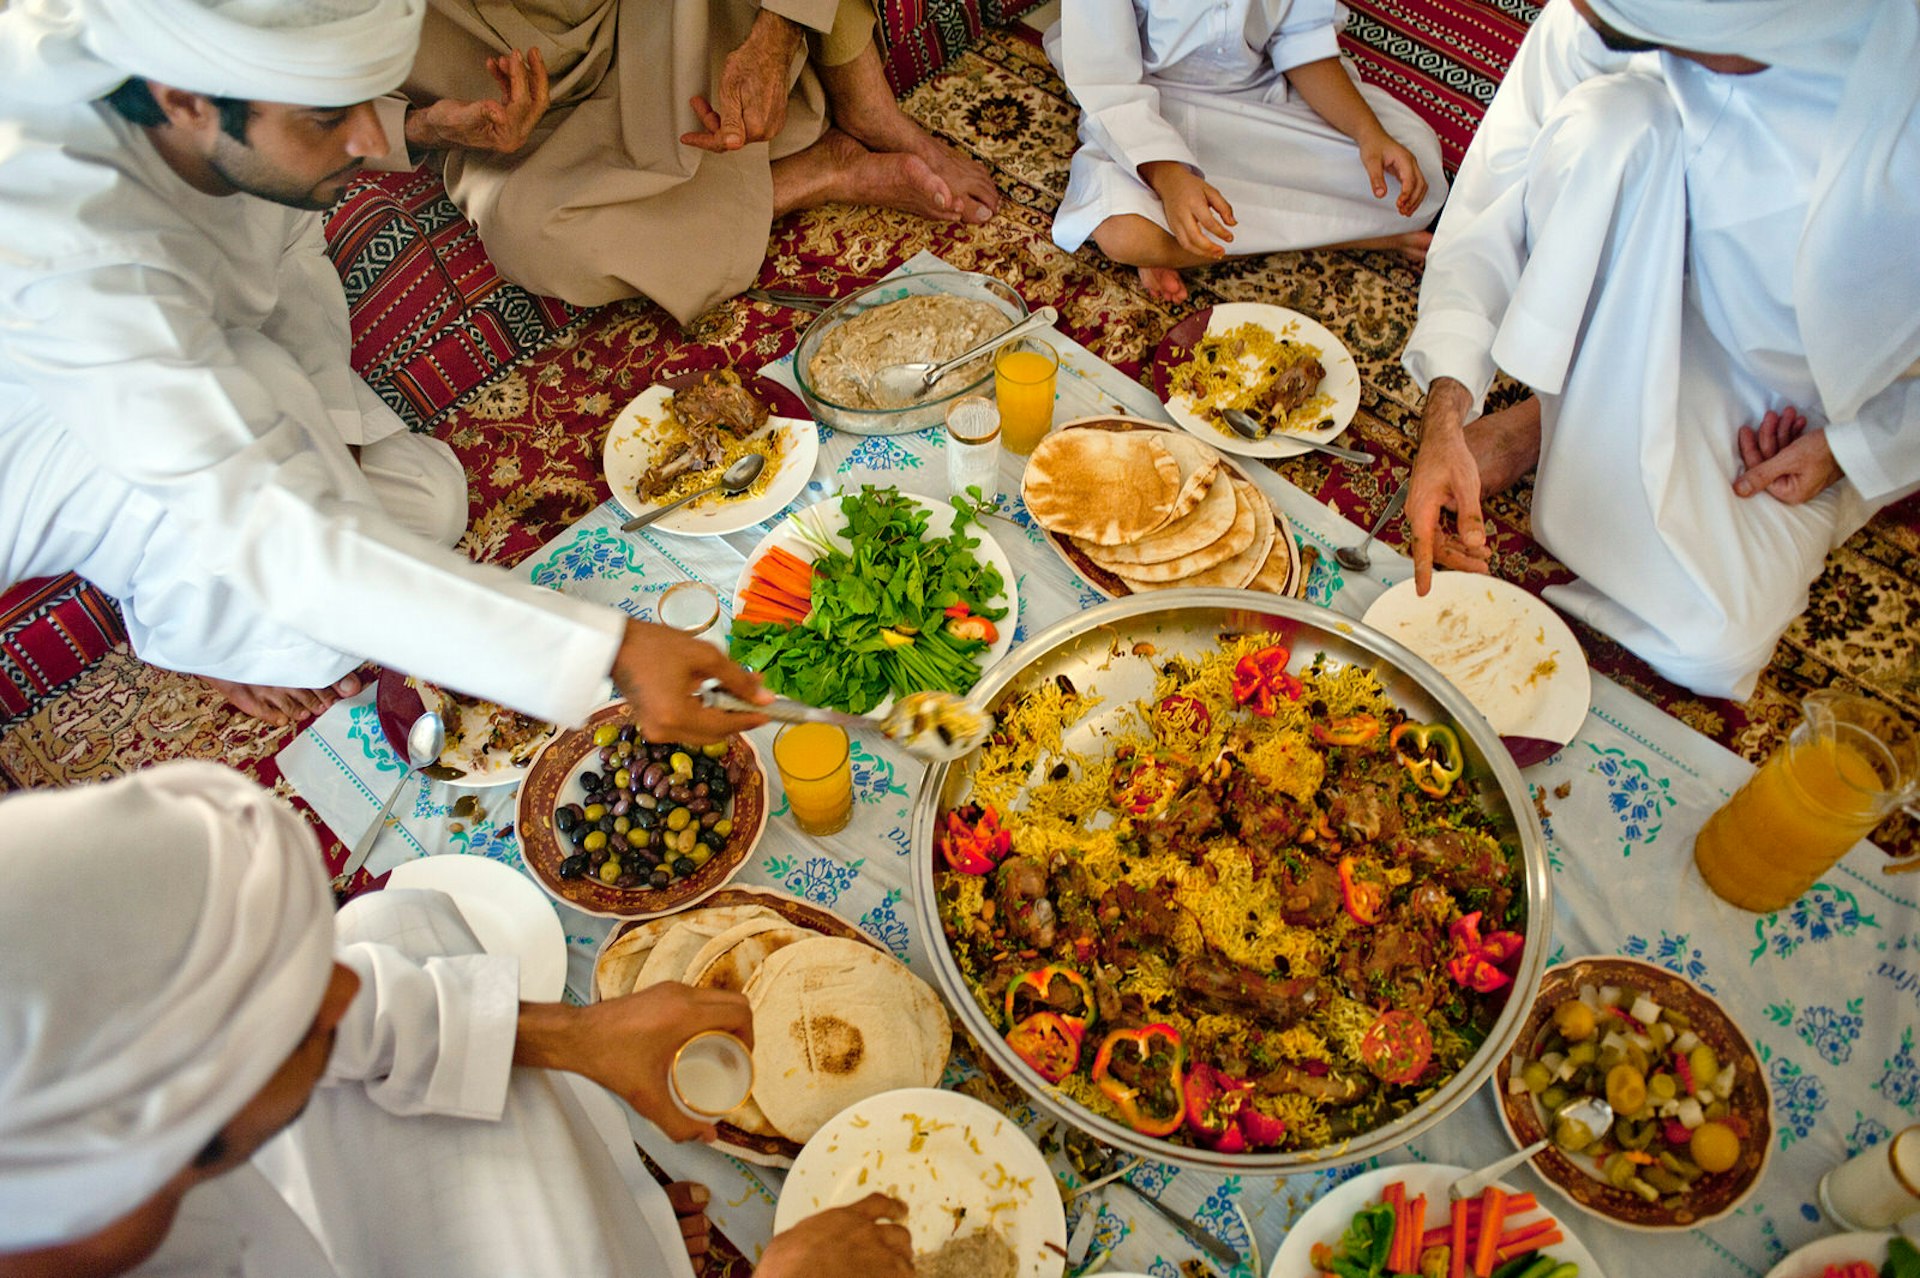 An Emirati family eat together to break the fast during Ramadan, Dubai, United Arab Emirates